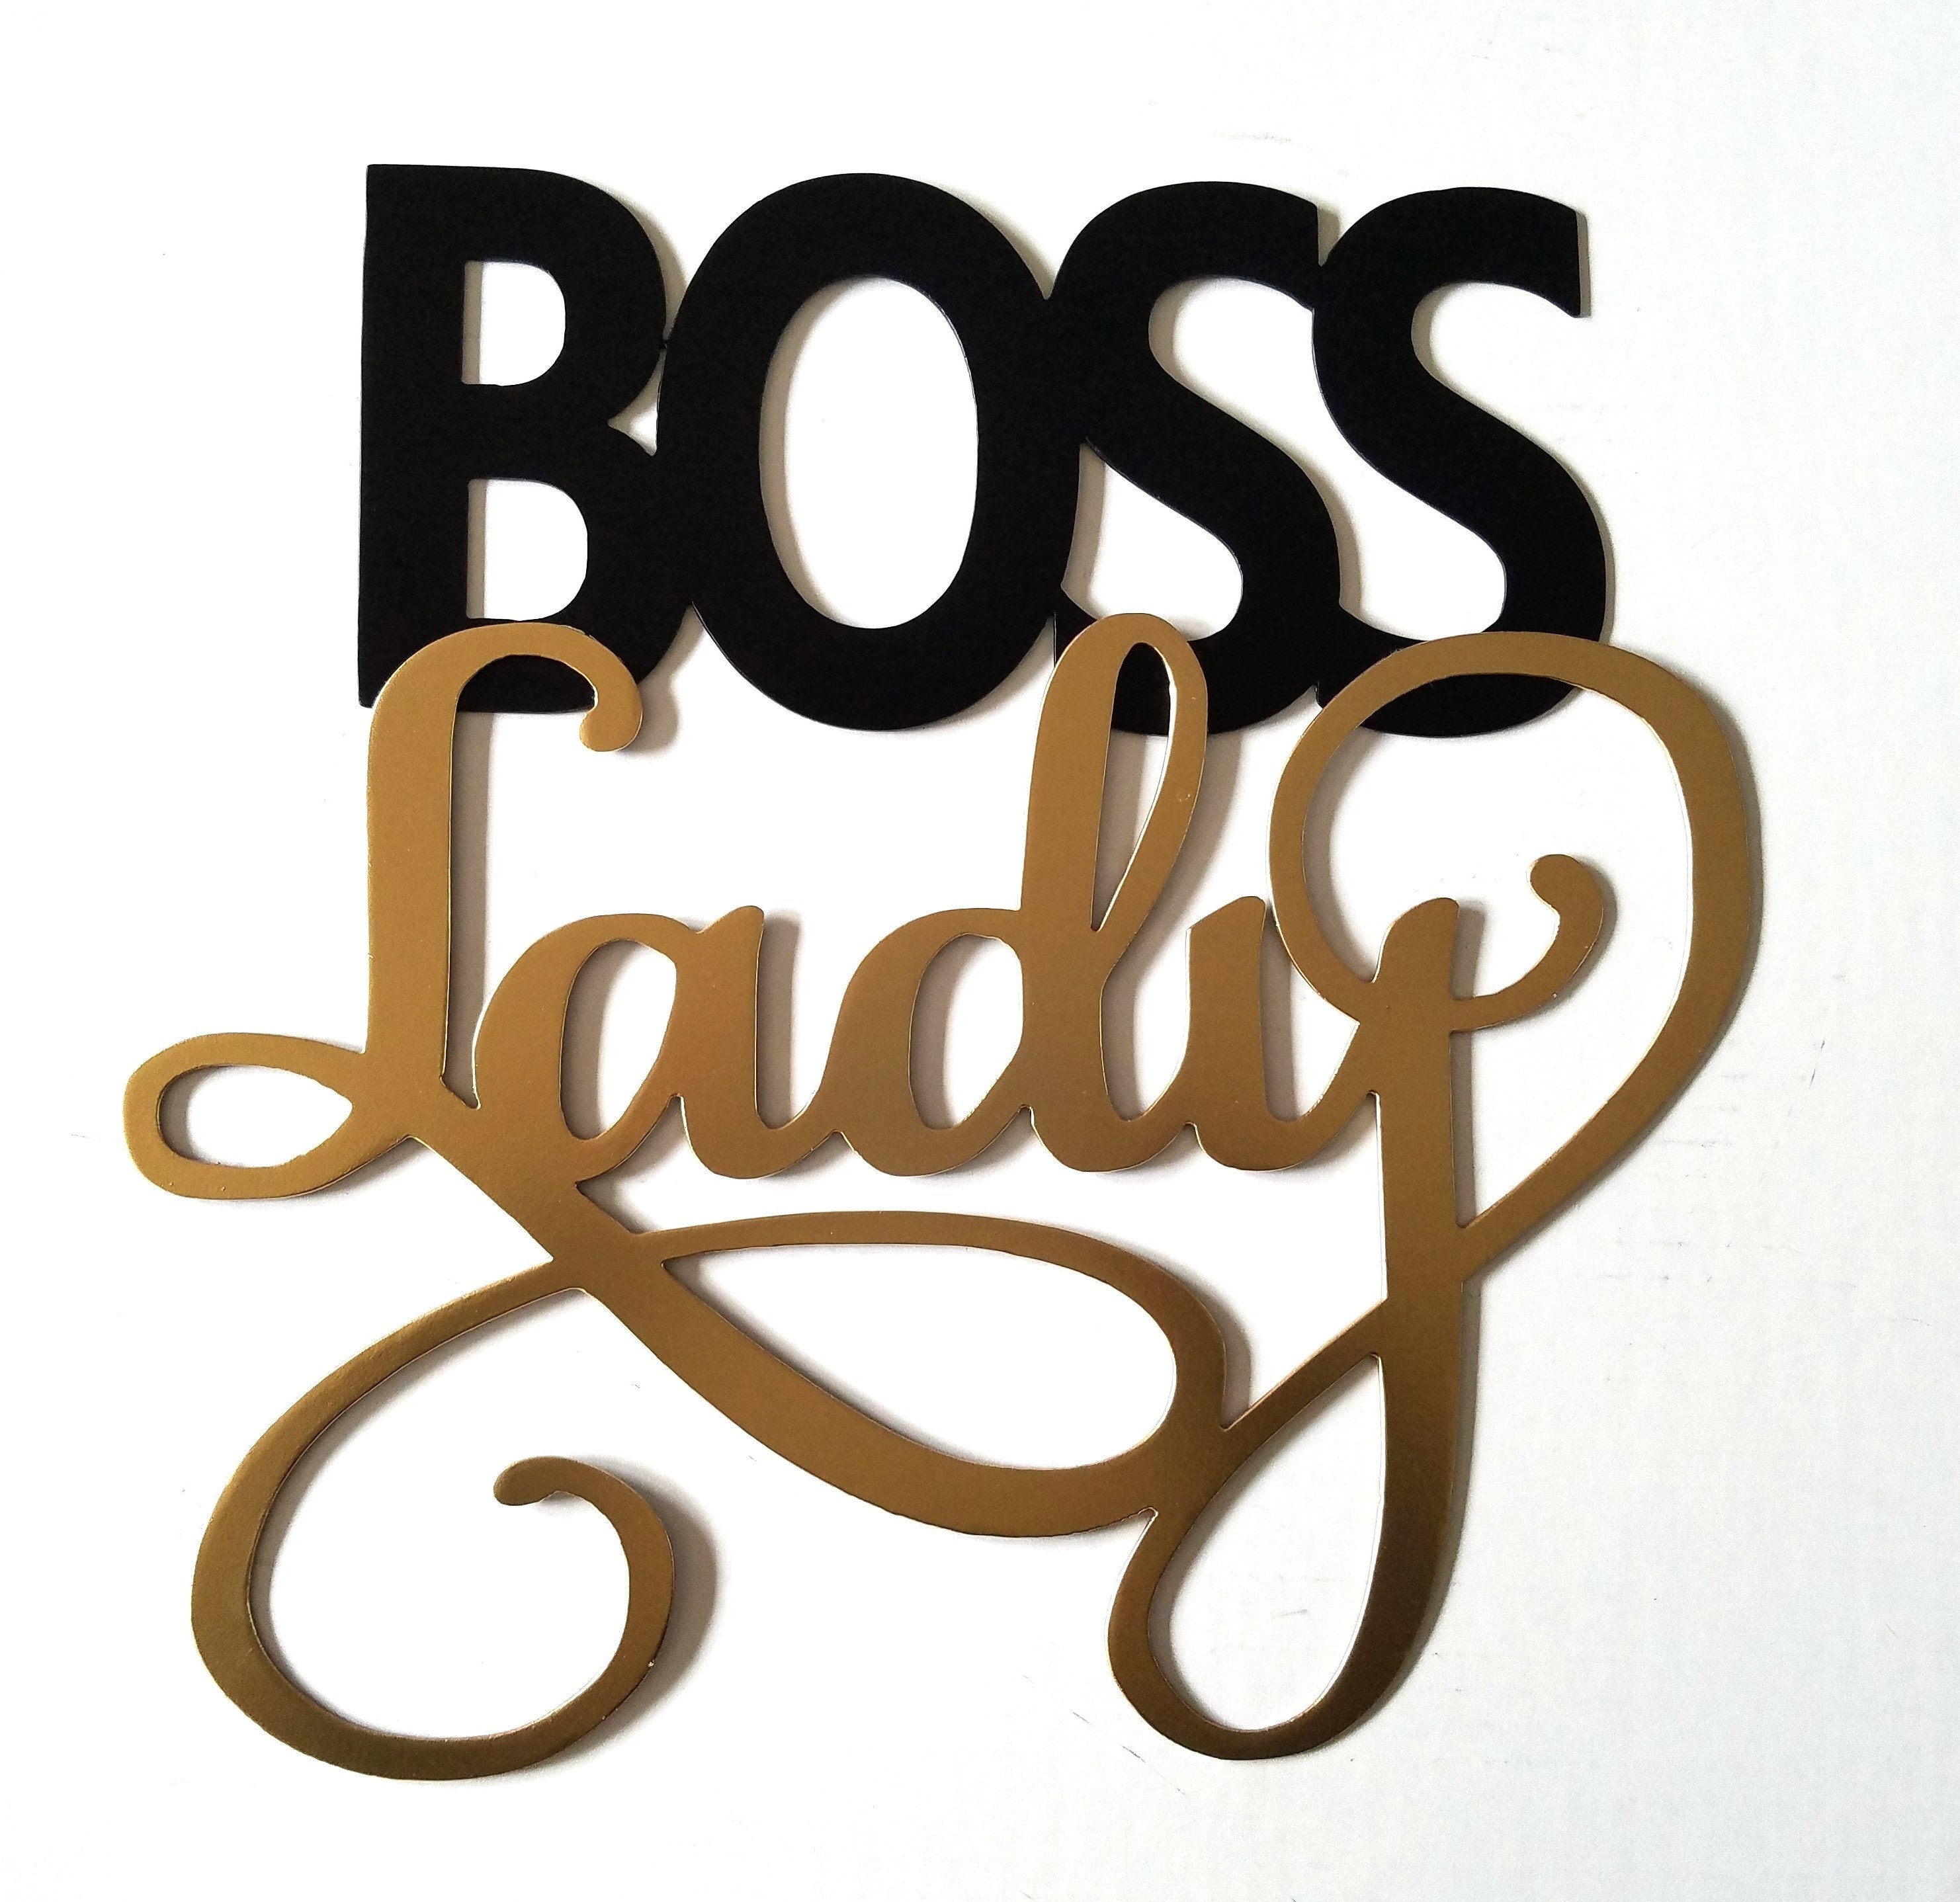 Lady boss is. Надпись босс. Lady надпись. Boss надпись красивая. Lady Boss надпись.